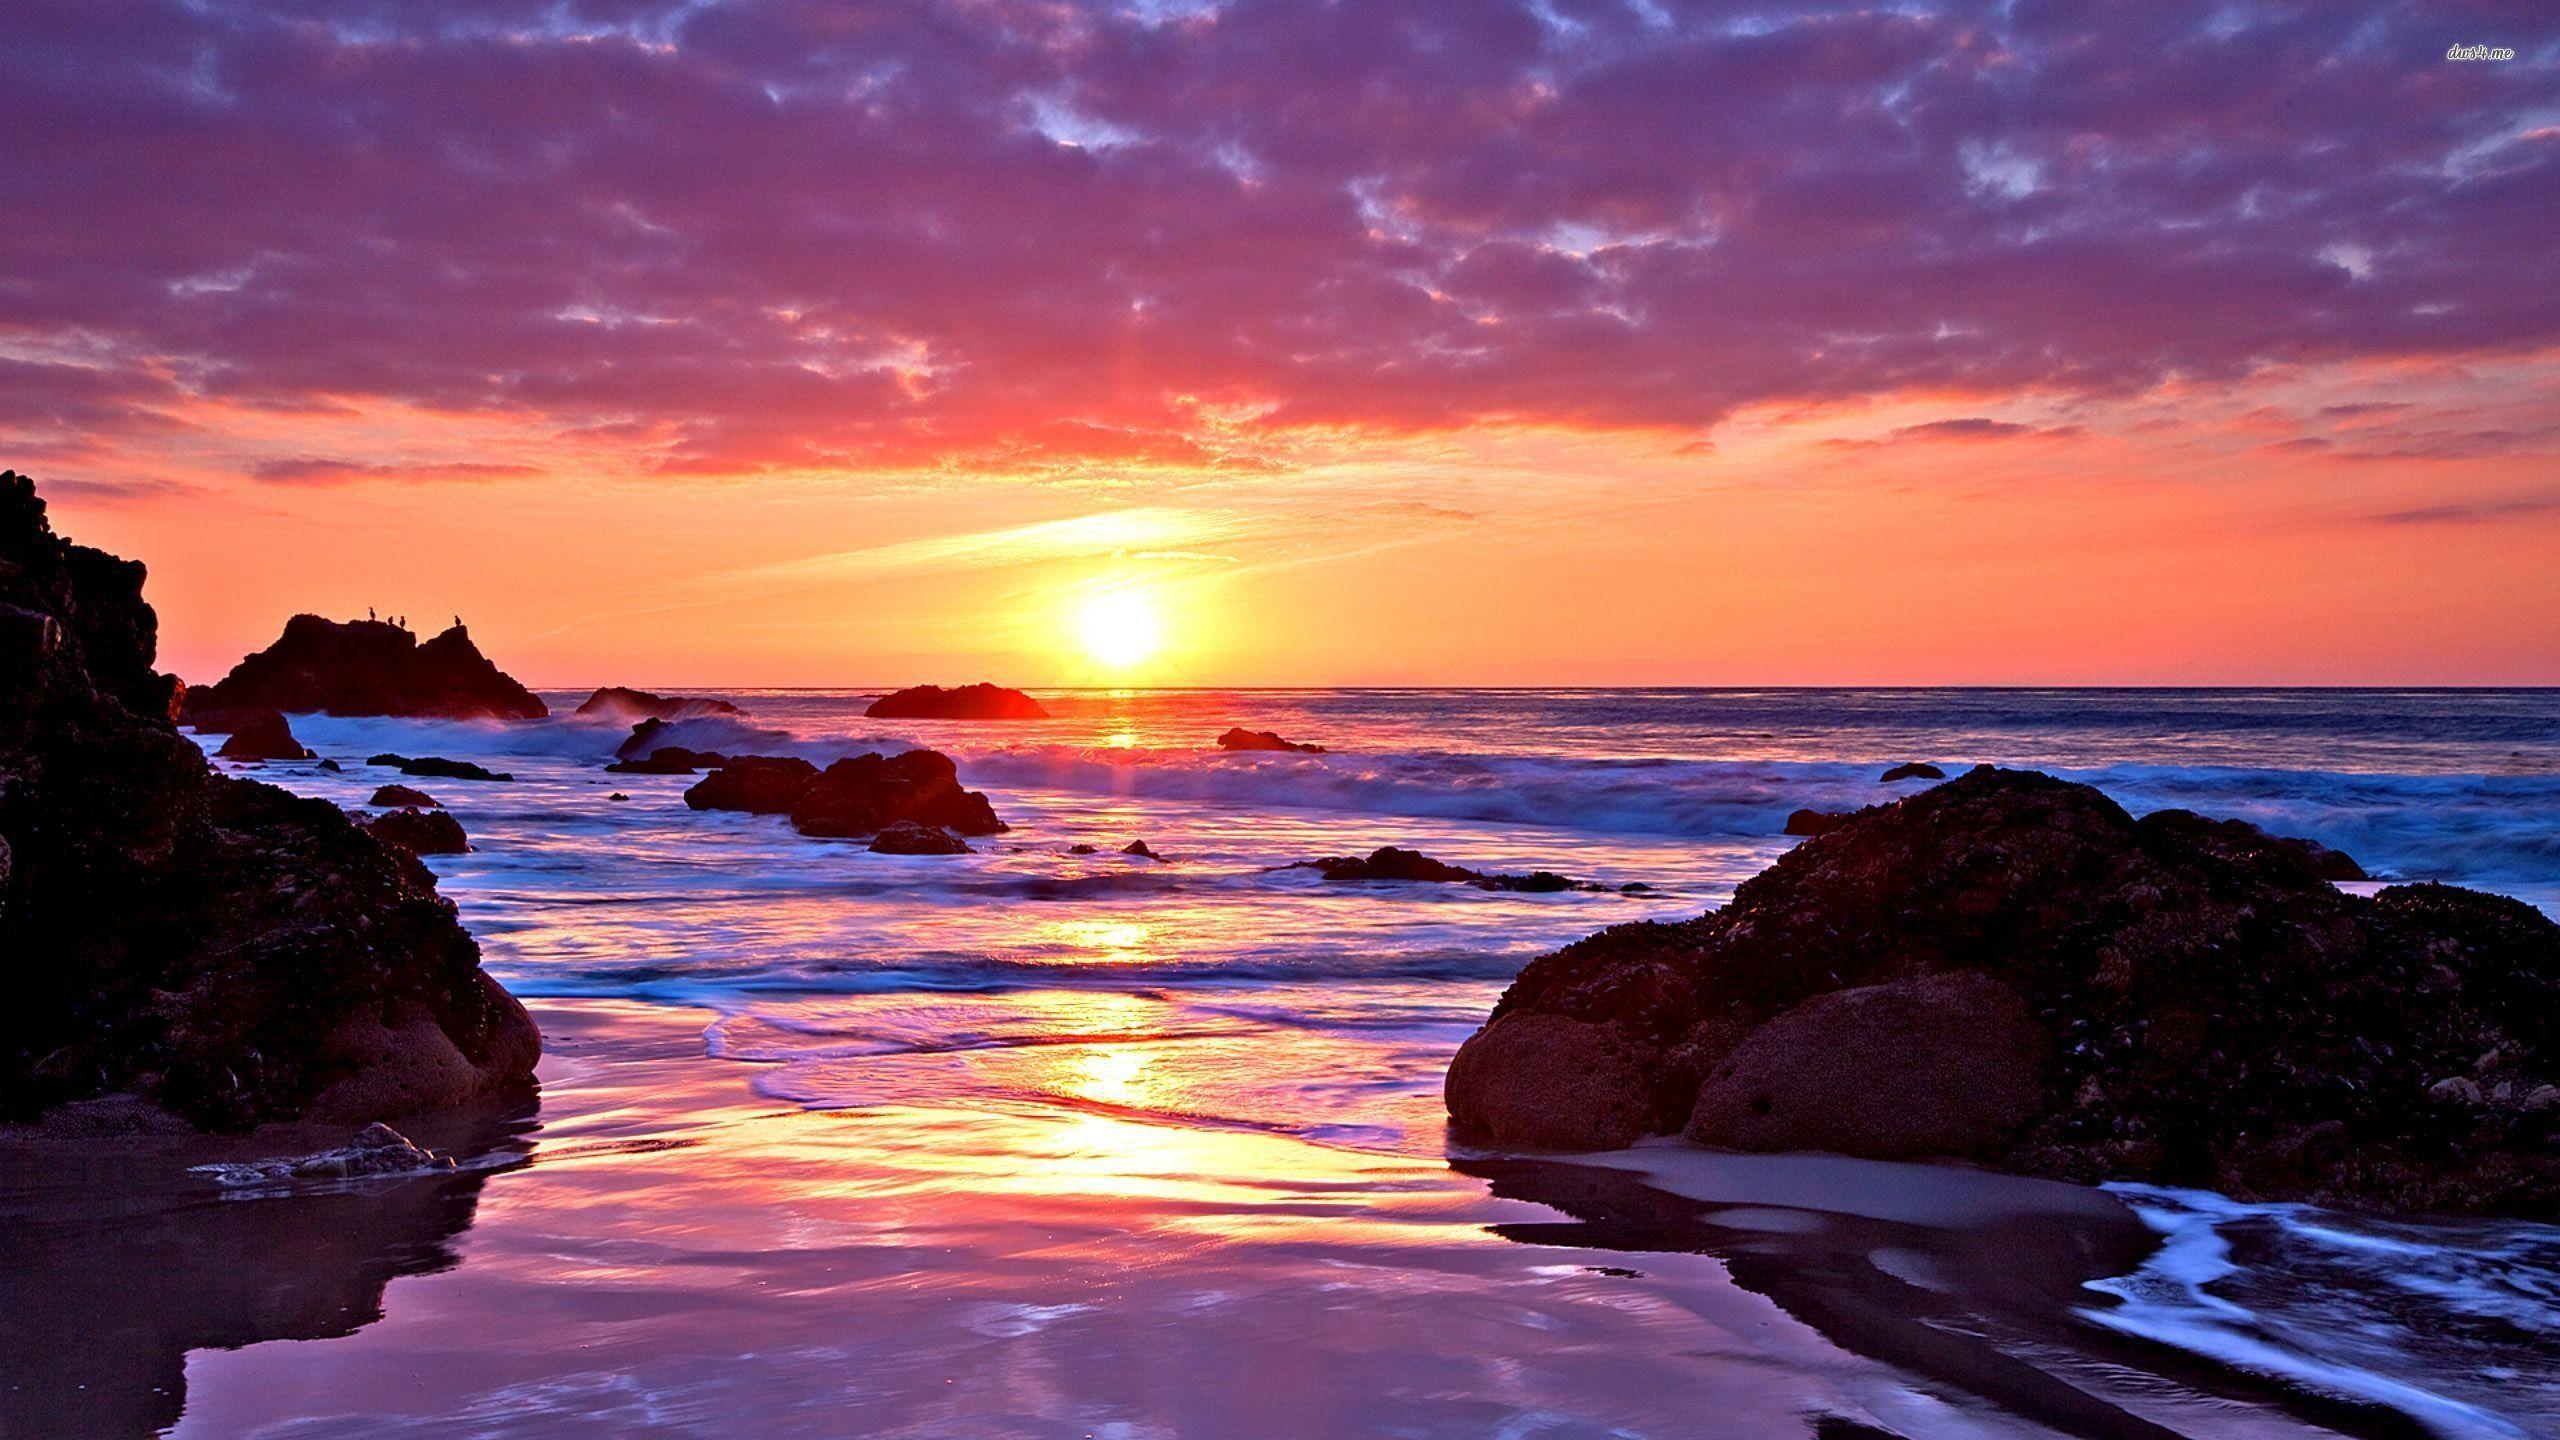 Tumblr Sunset Desktop Wallpapers - Top Free Tumblr Sunset Desktop